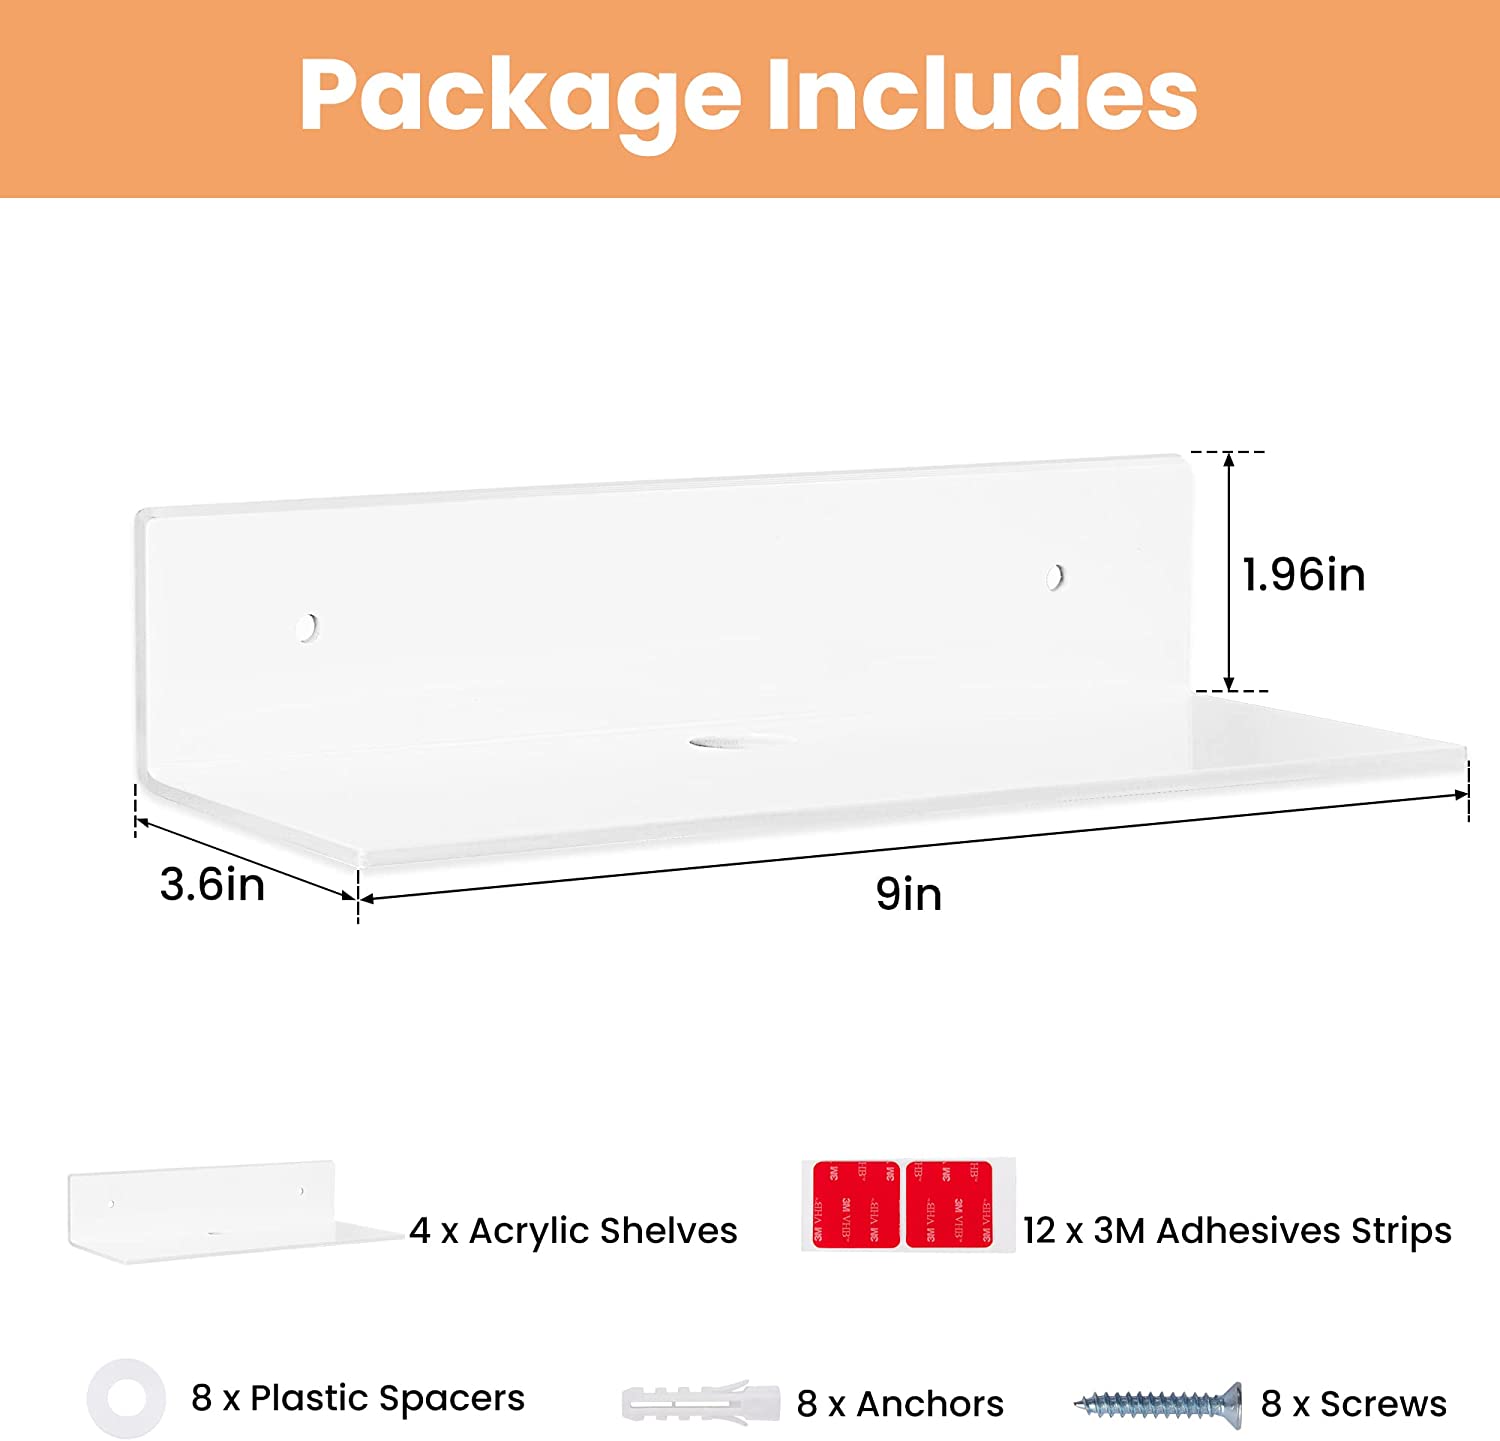 luium 9 Inch Acrylic Floating Shelf No Drill Adhesive Wall Shelf